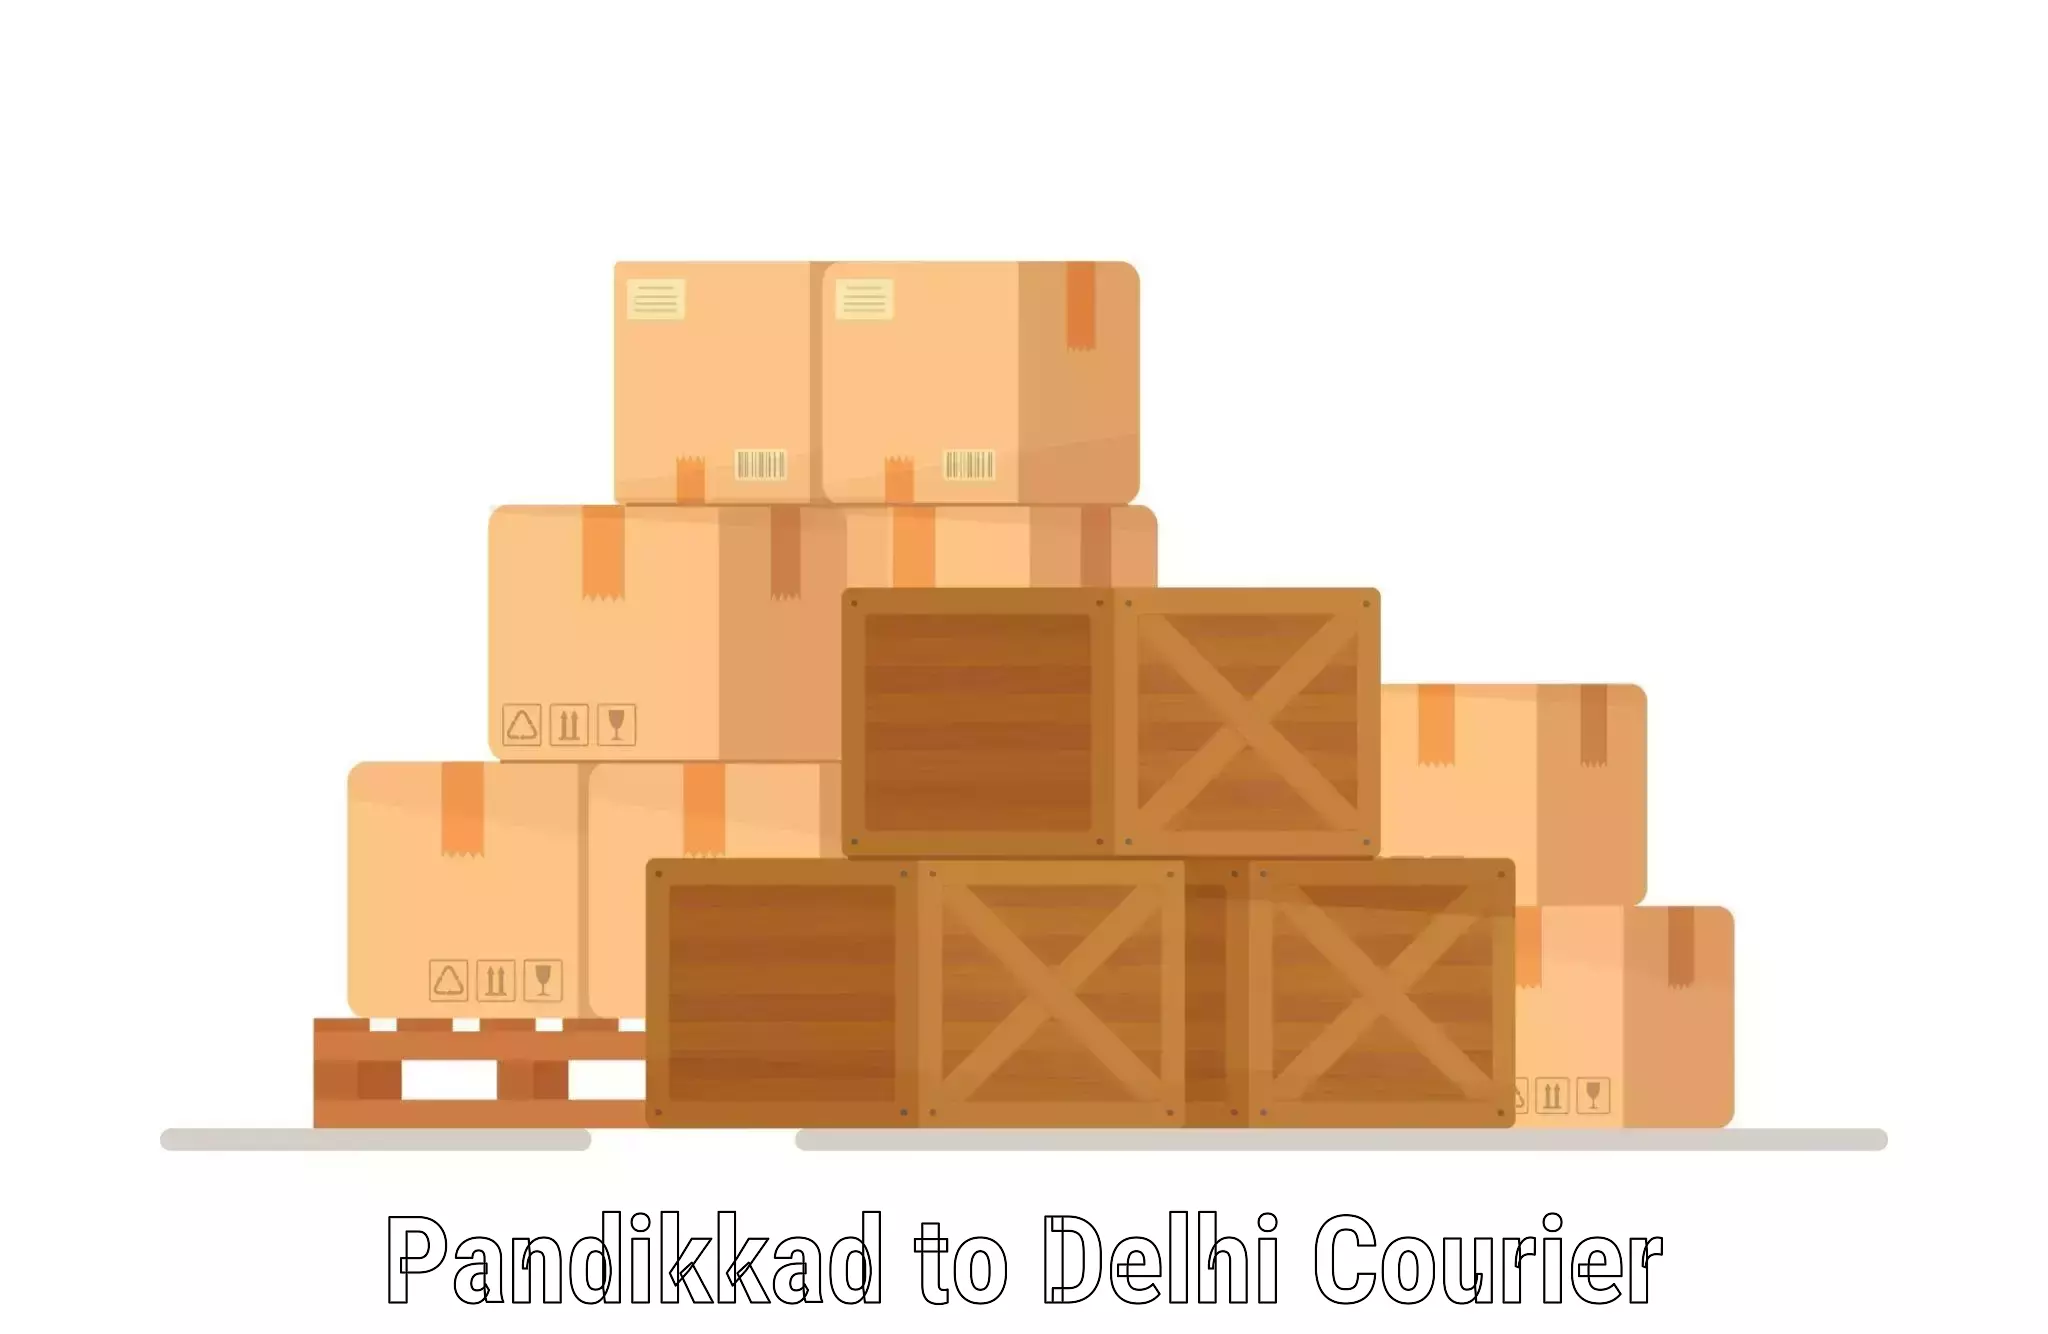 Multi-city courier Pandikkad to Delhi